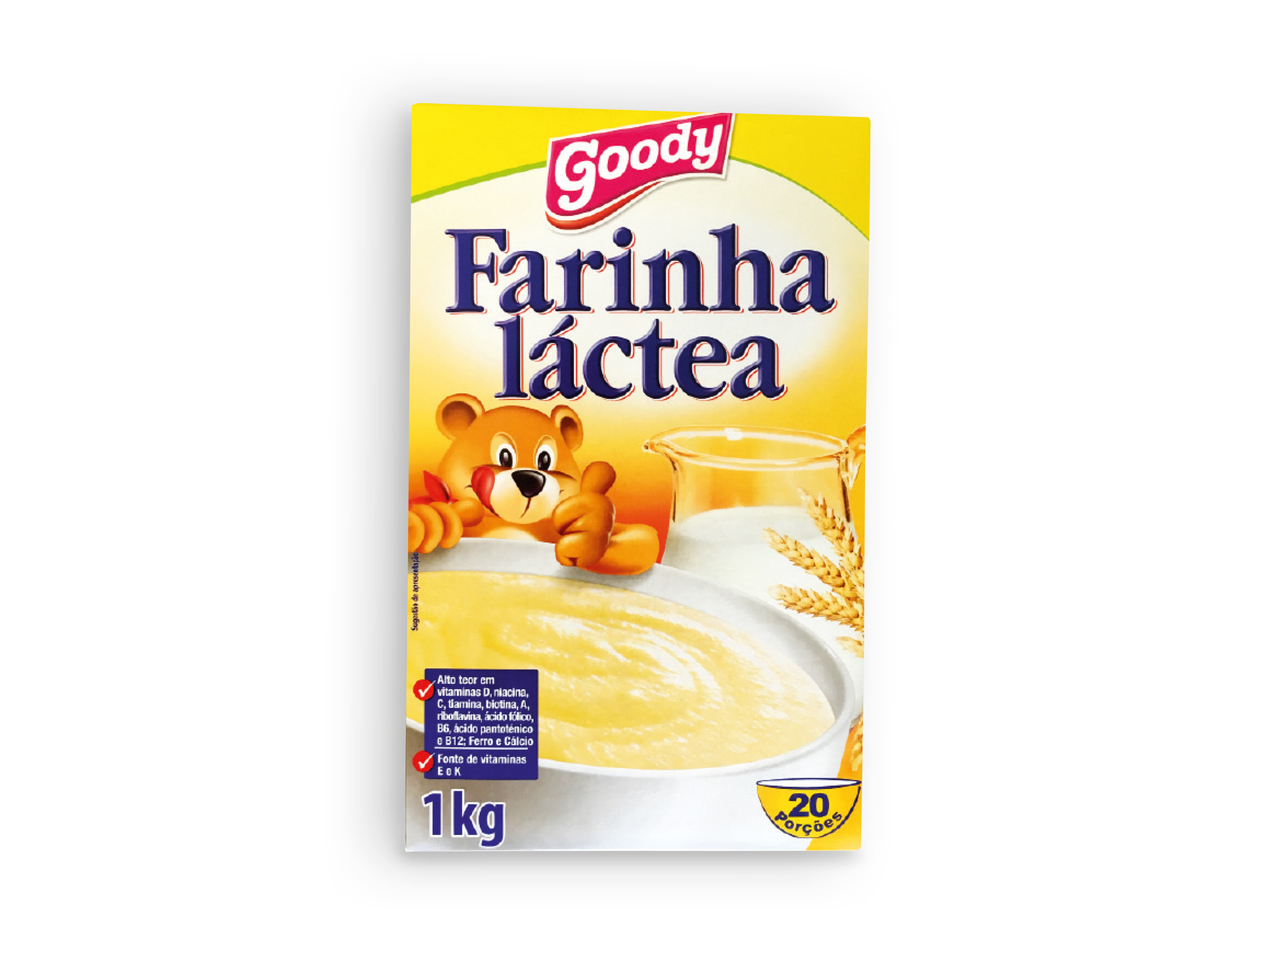 GOODY(R) Farinha Láctea